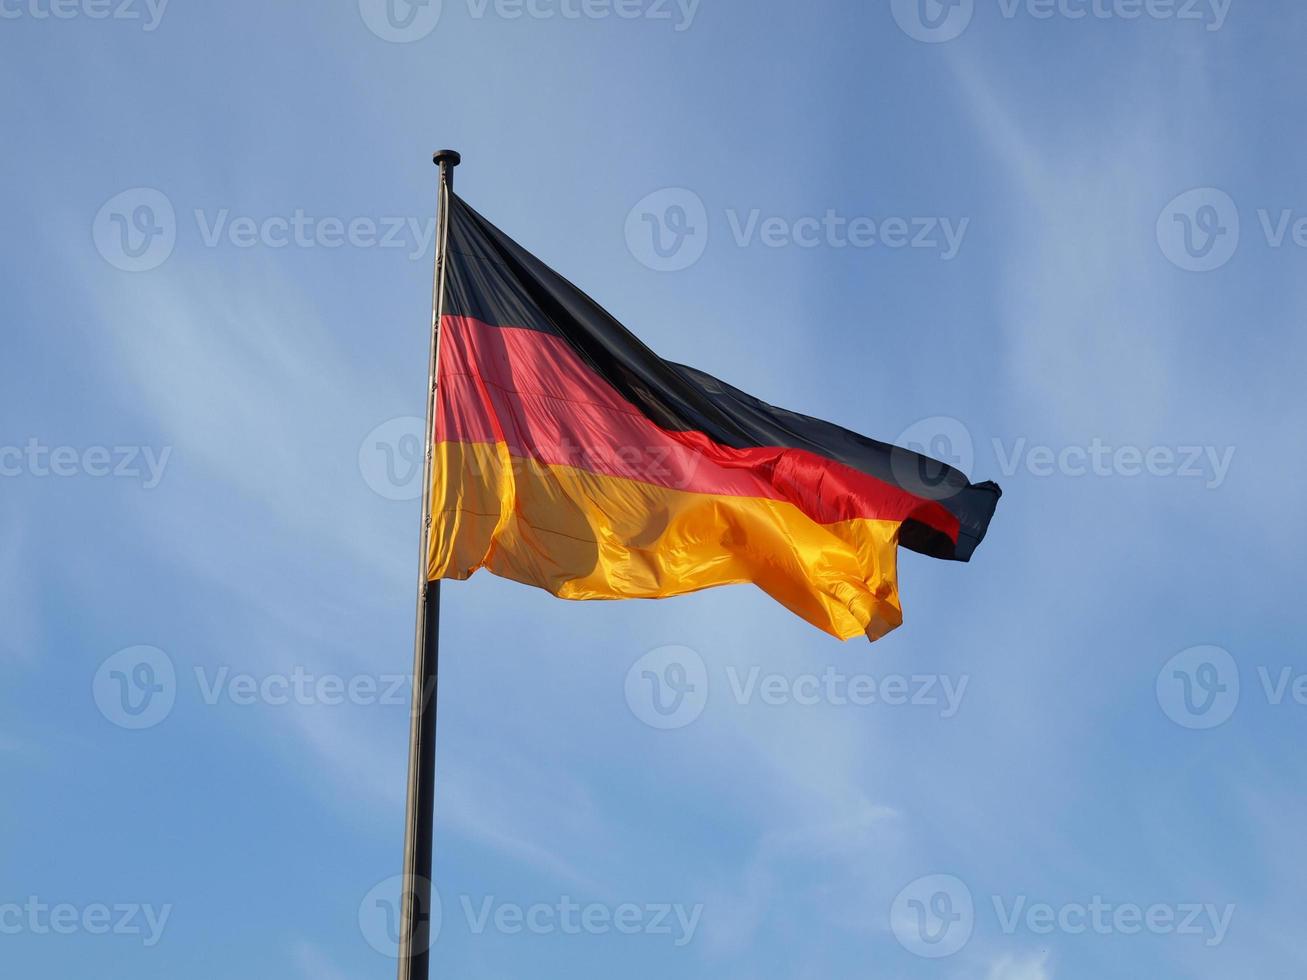 Duitse vlag over blauwe lucht foto